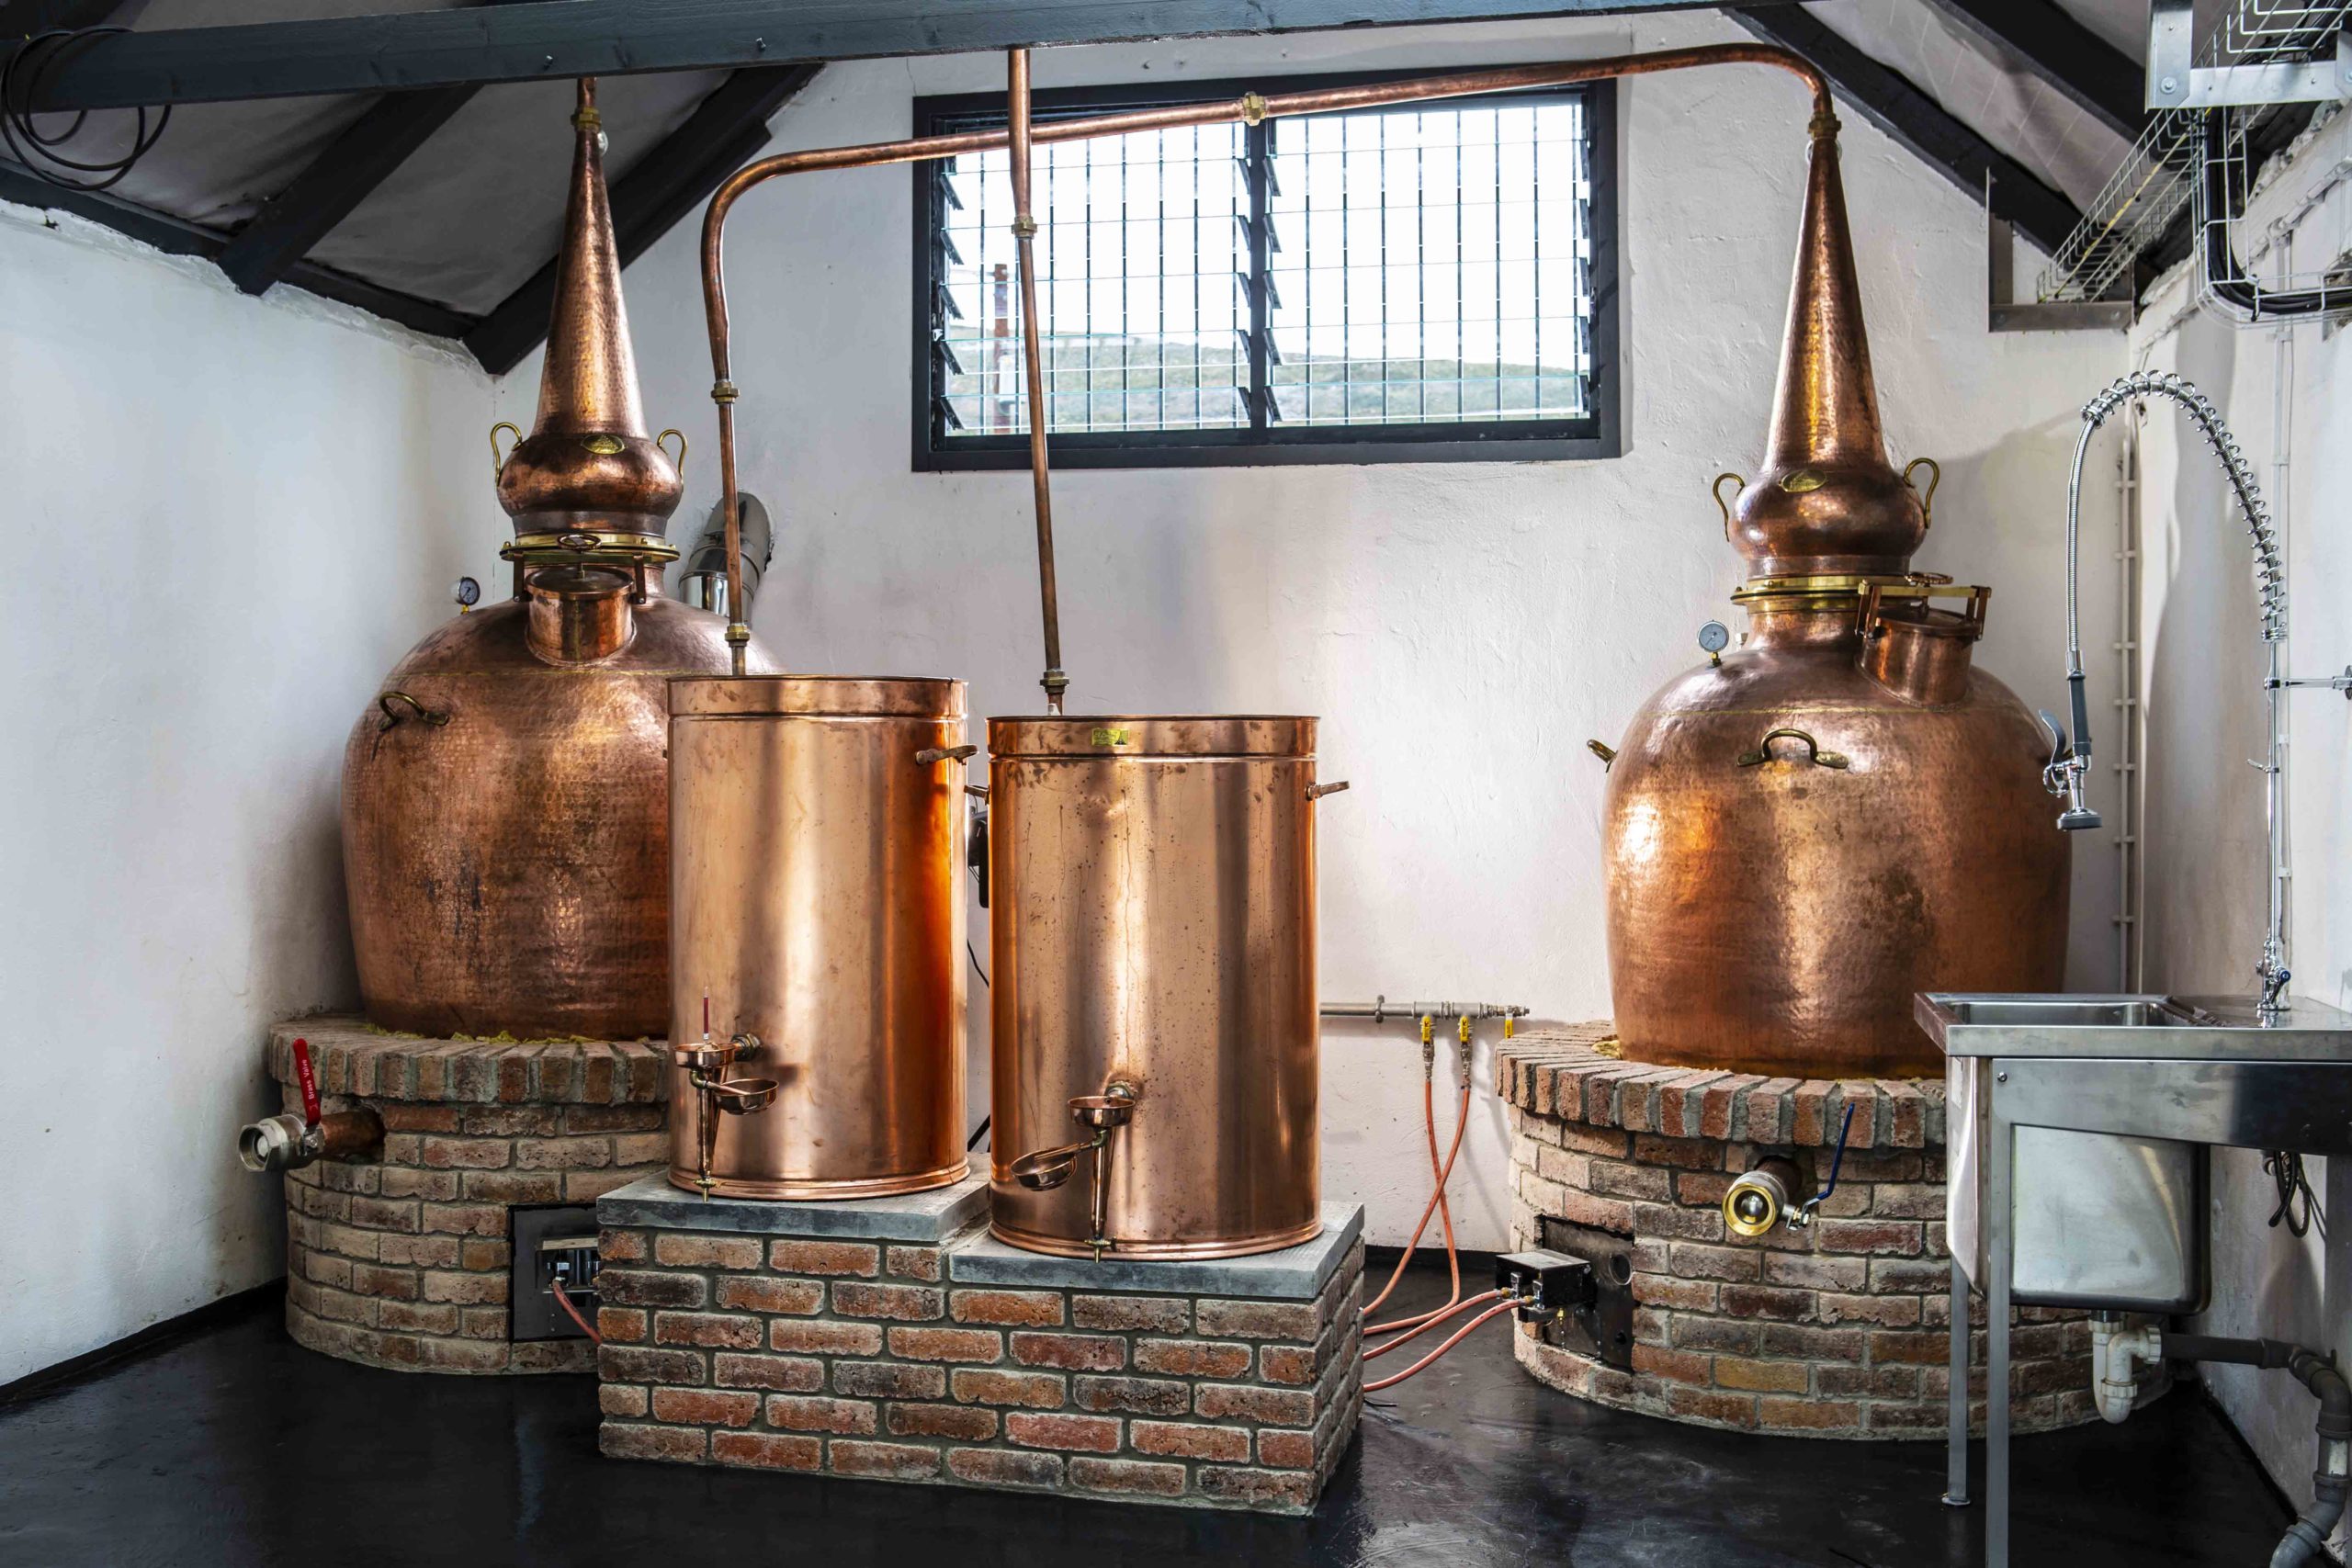 Killowen Distillery